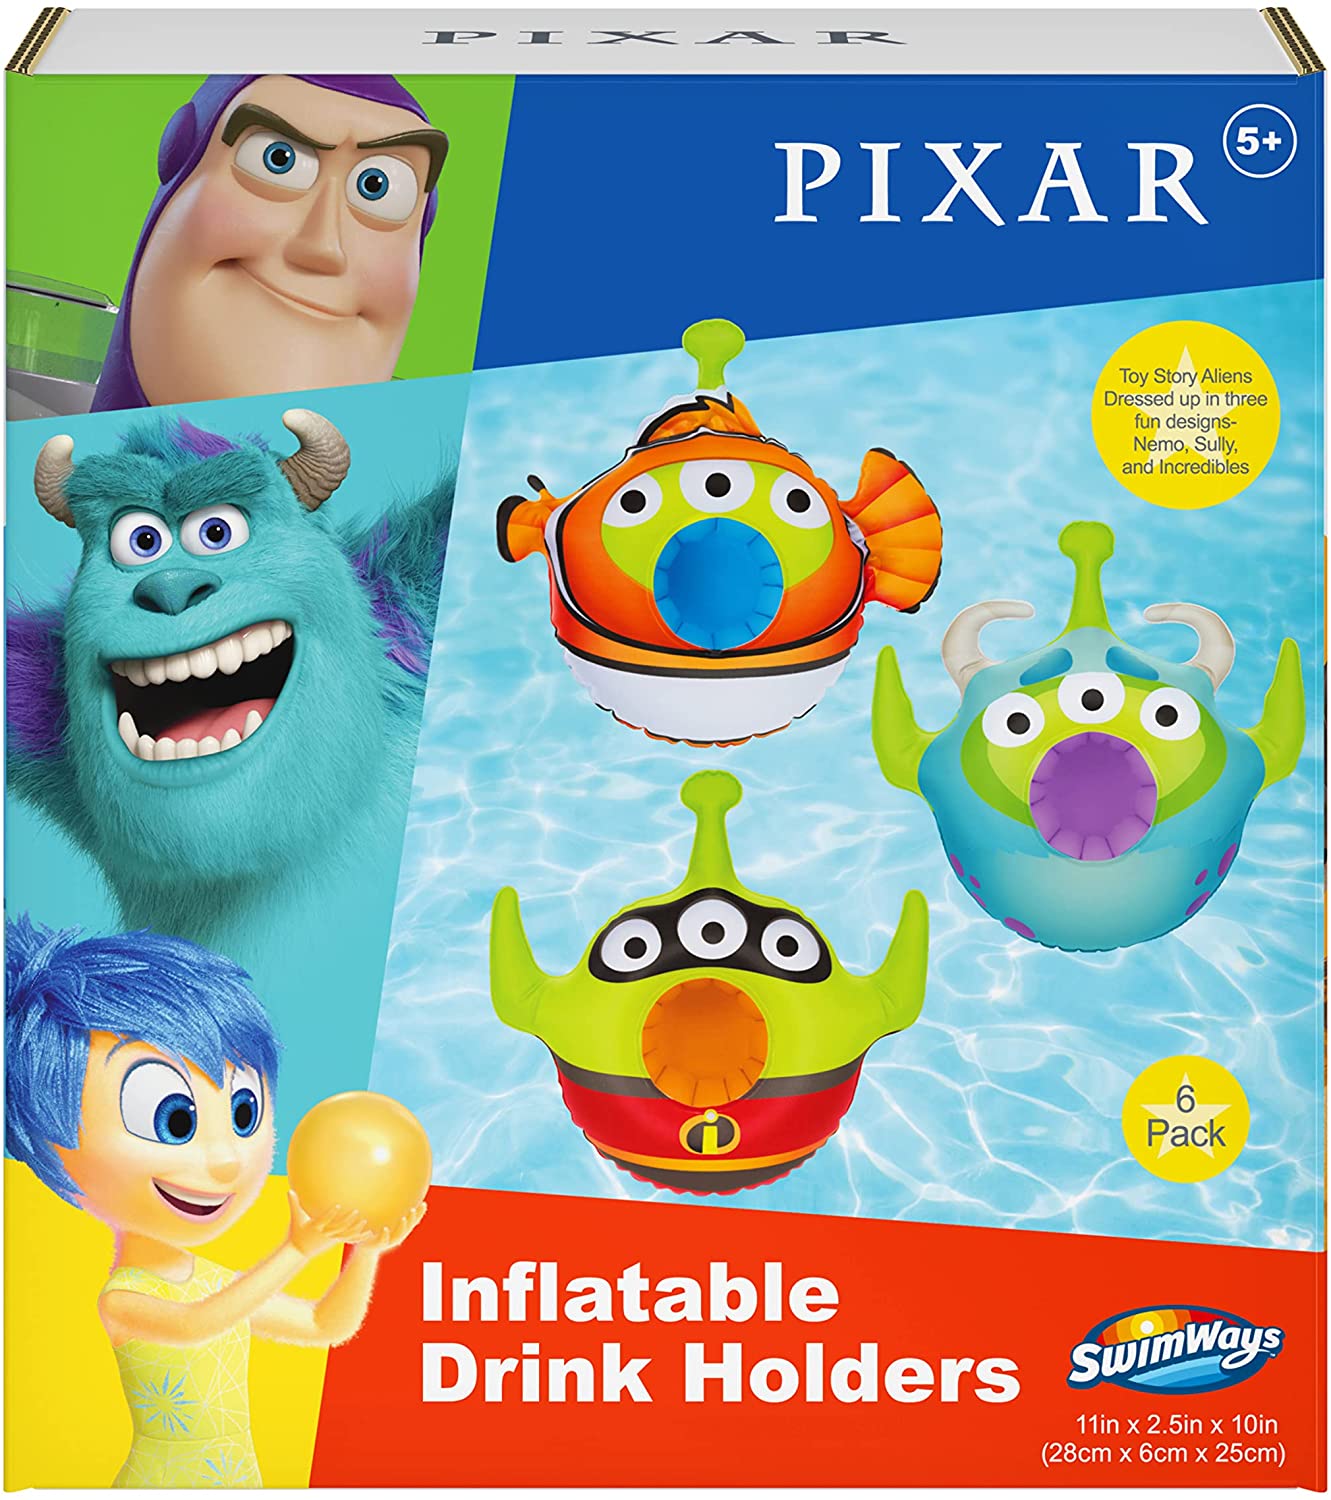 6-Pack SwimWays Disney Pixar Inflatable Floating Pool Drink Holders (Toy Story Alien Mash-Up) $4.95, 3-Pc SwimWays Disney Finding Dory Diving Toys $5.95 + FS w/ Prime or on $25+